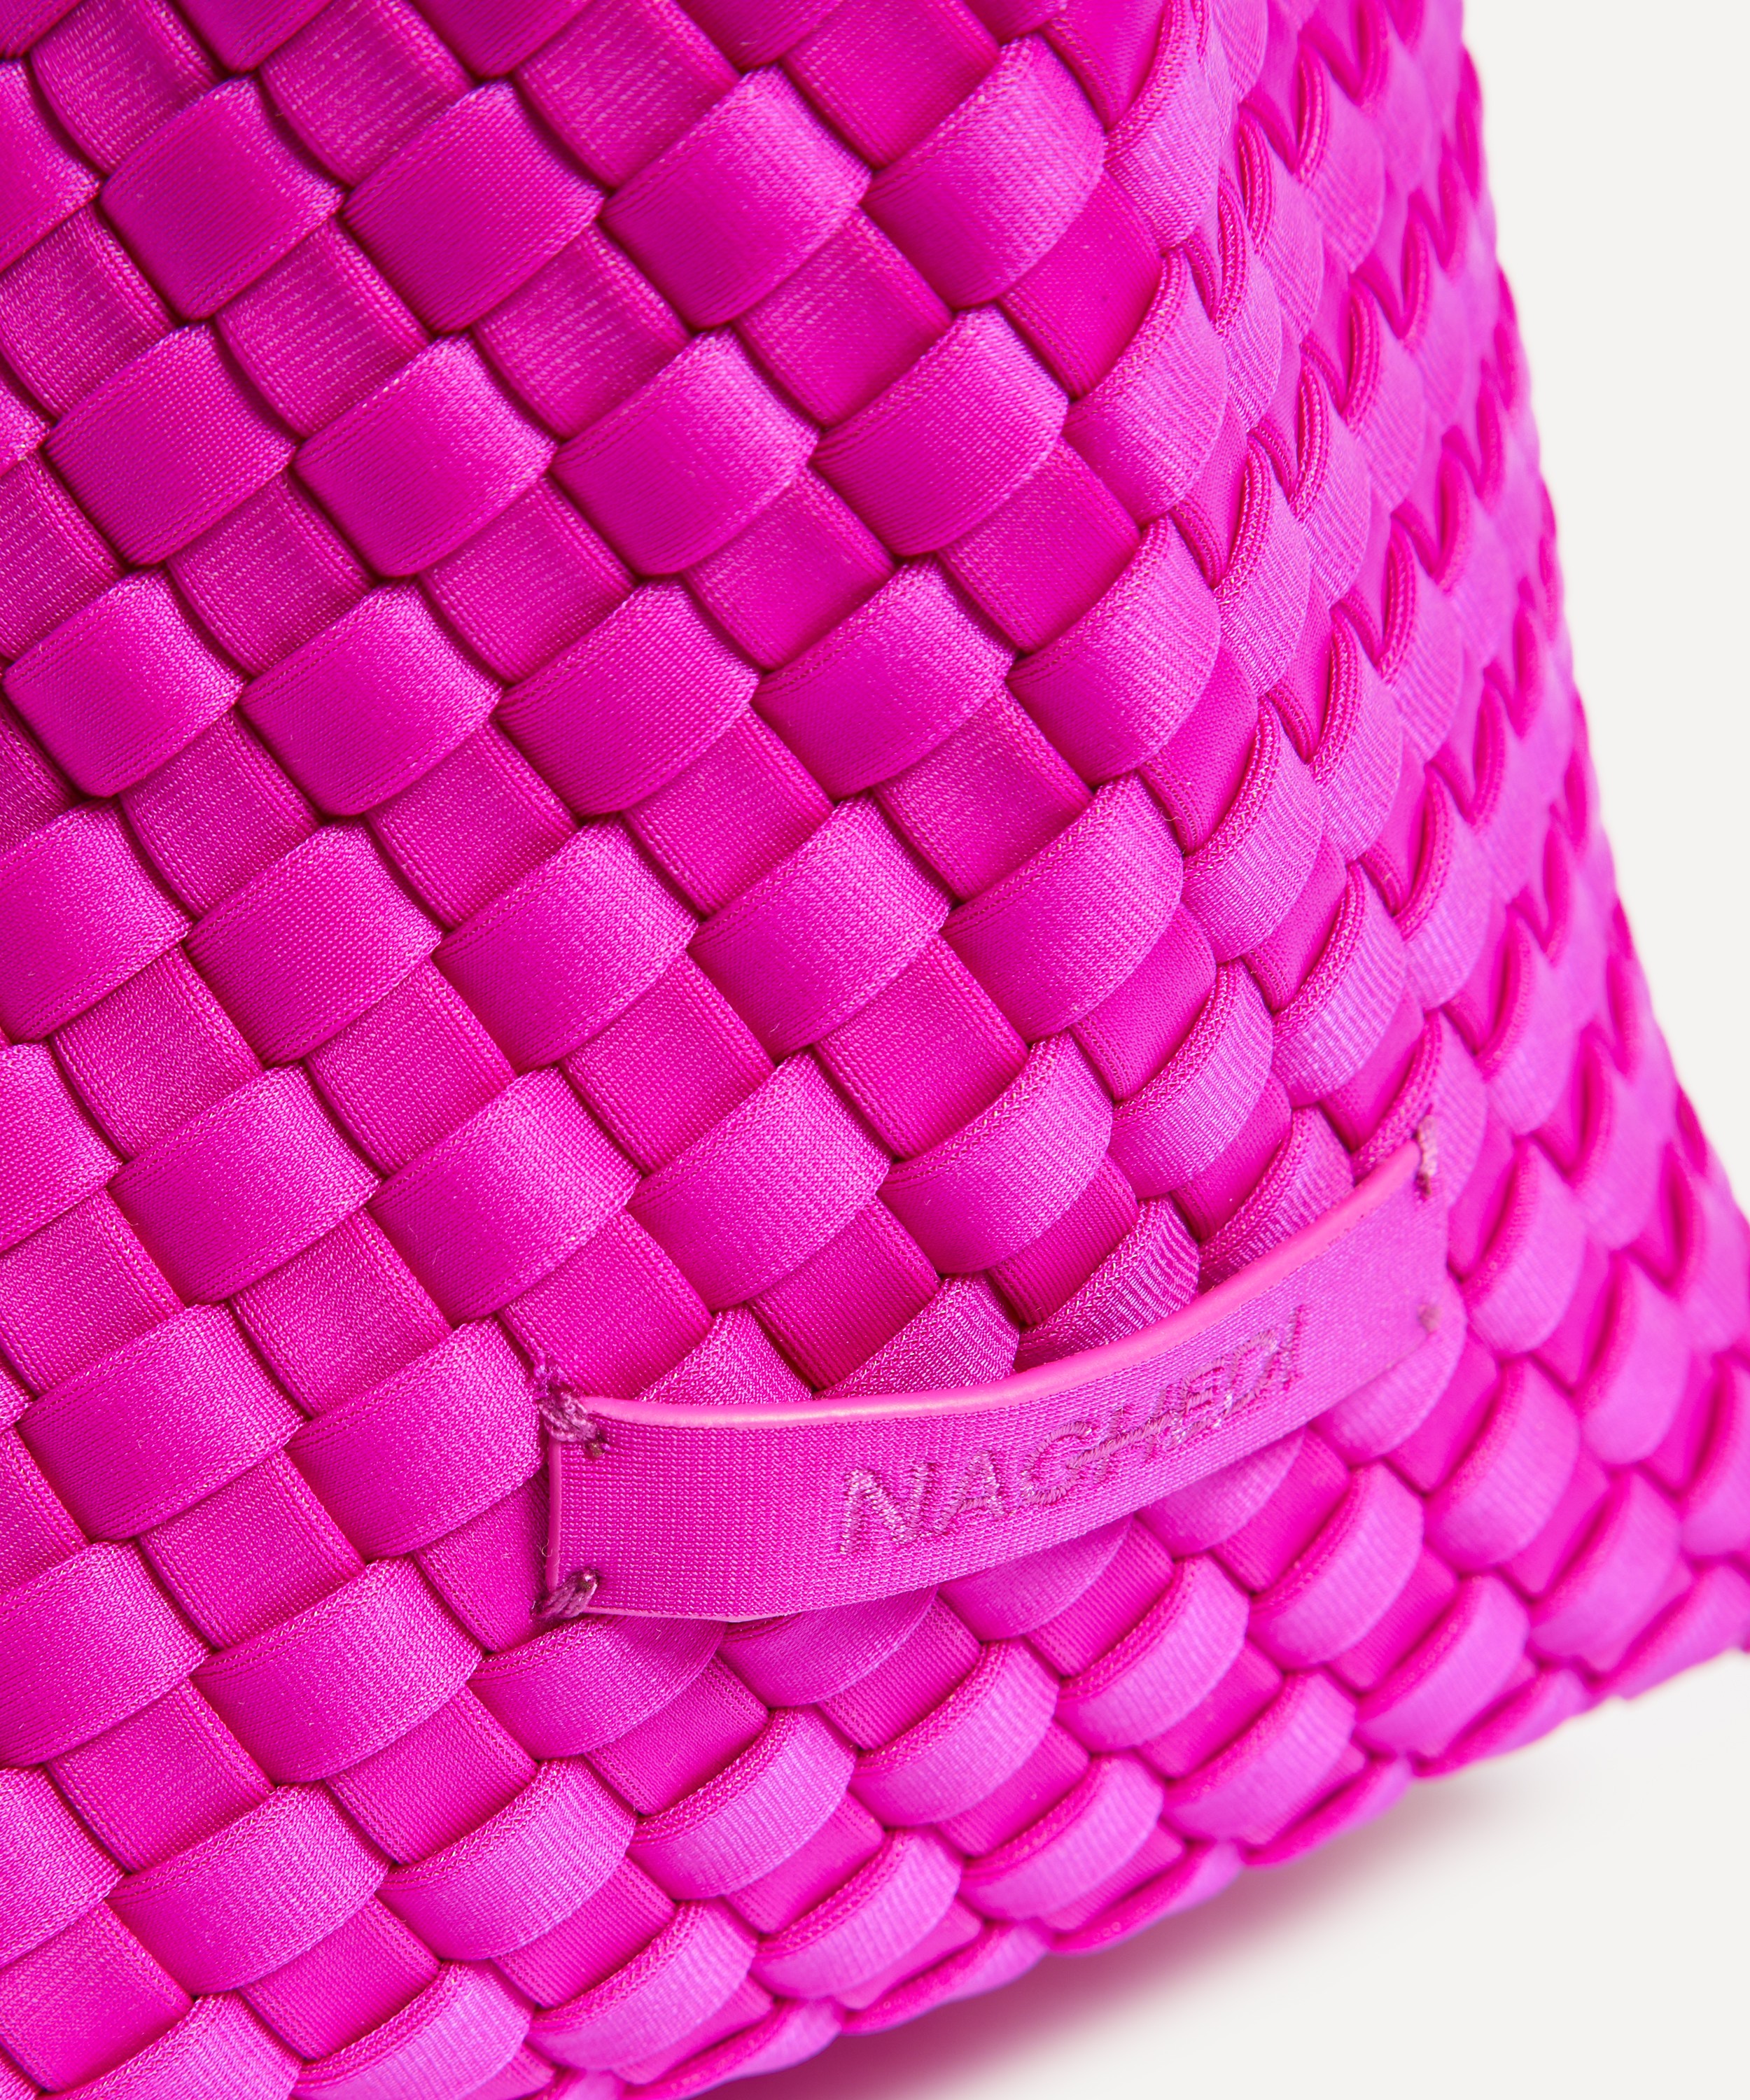 Naghedi St. Barths Medium Tote - Solid Miami Pink